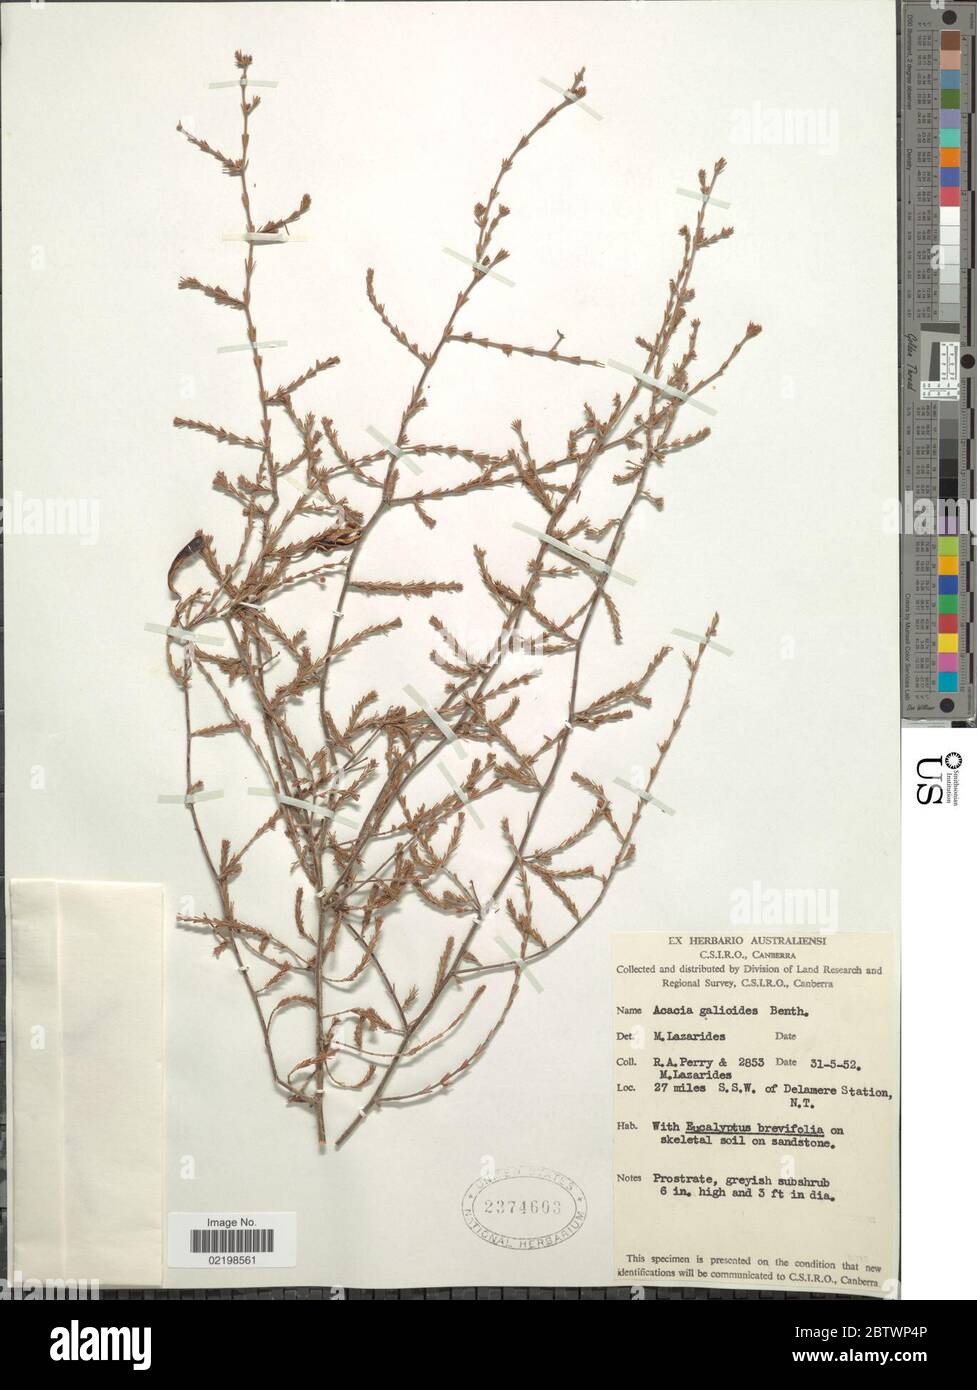 Acacia galioides Benth. Stock Photo